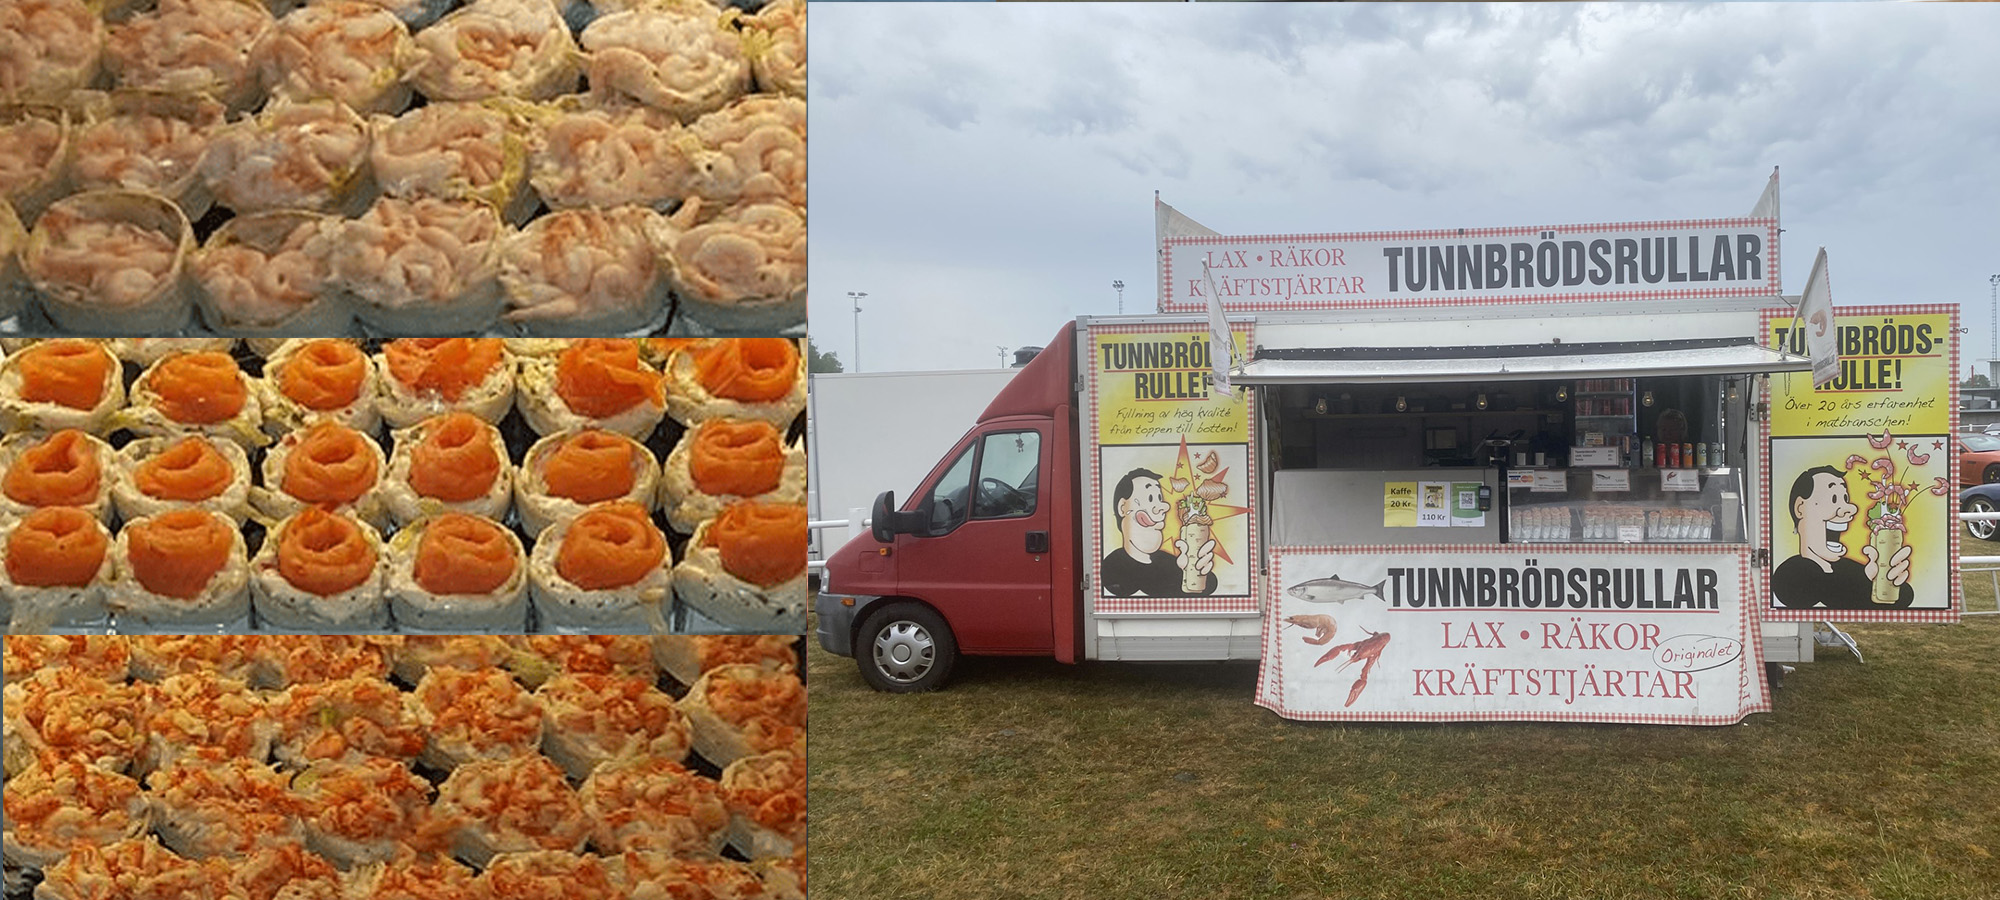 Food Truck - TUNNBRODSGUBBEN